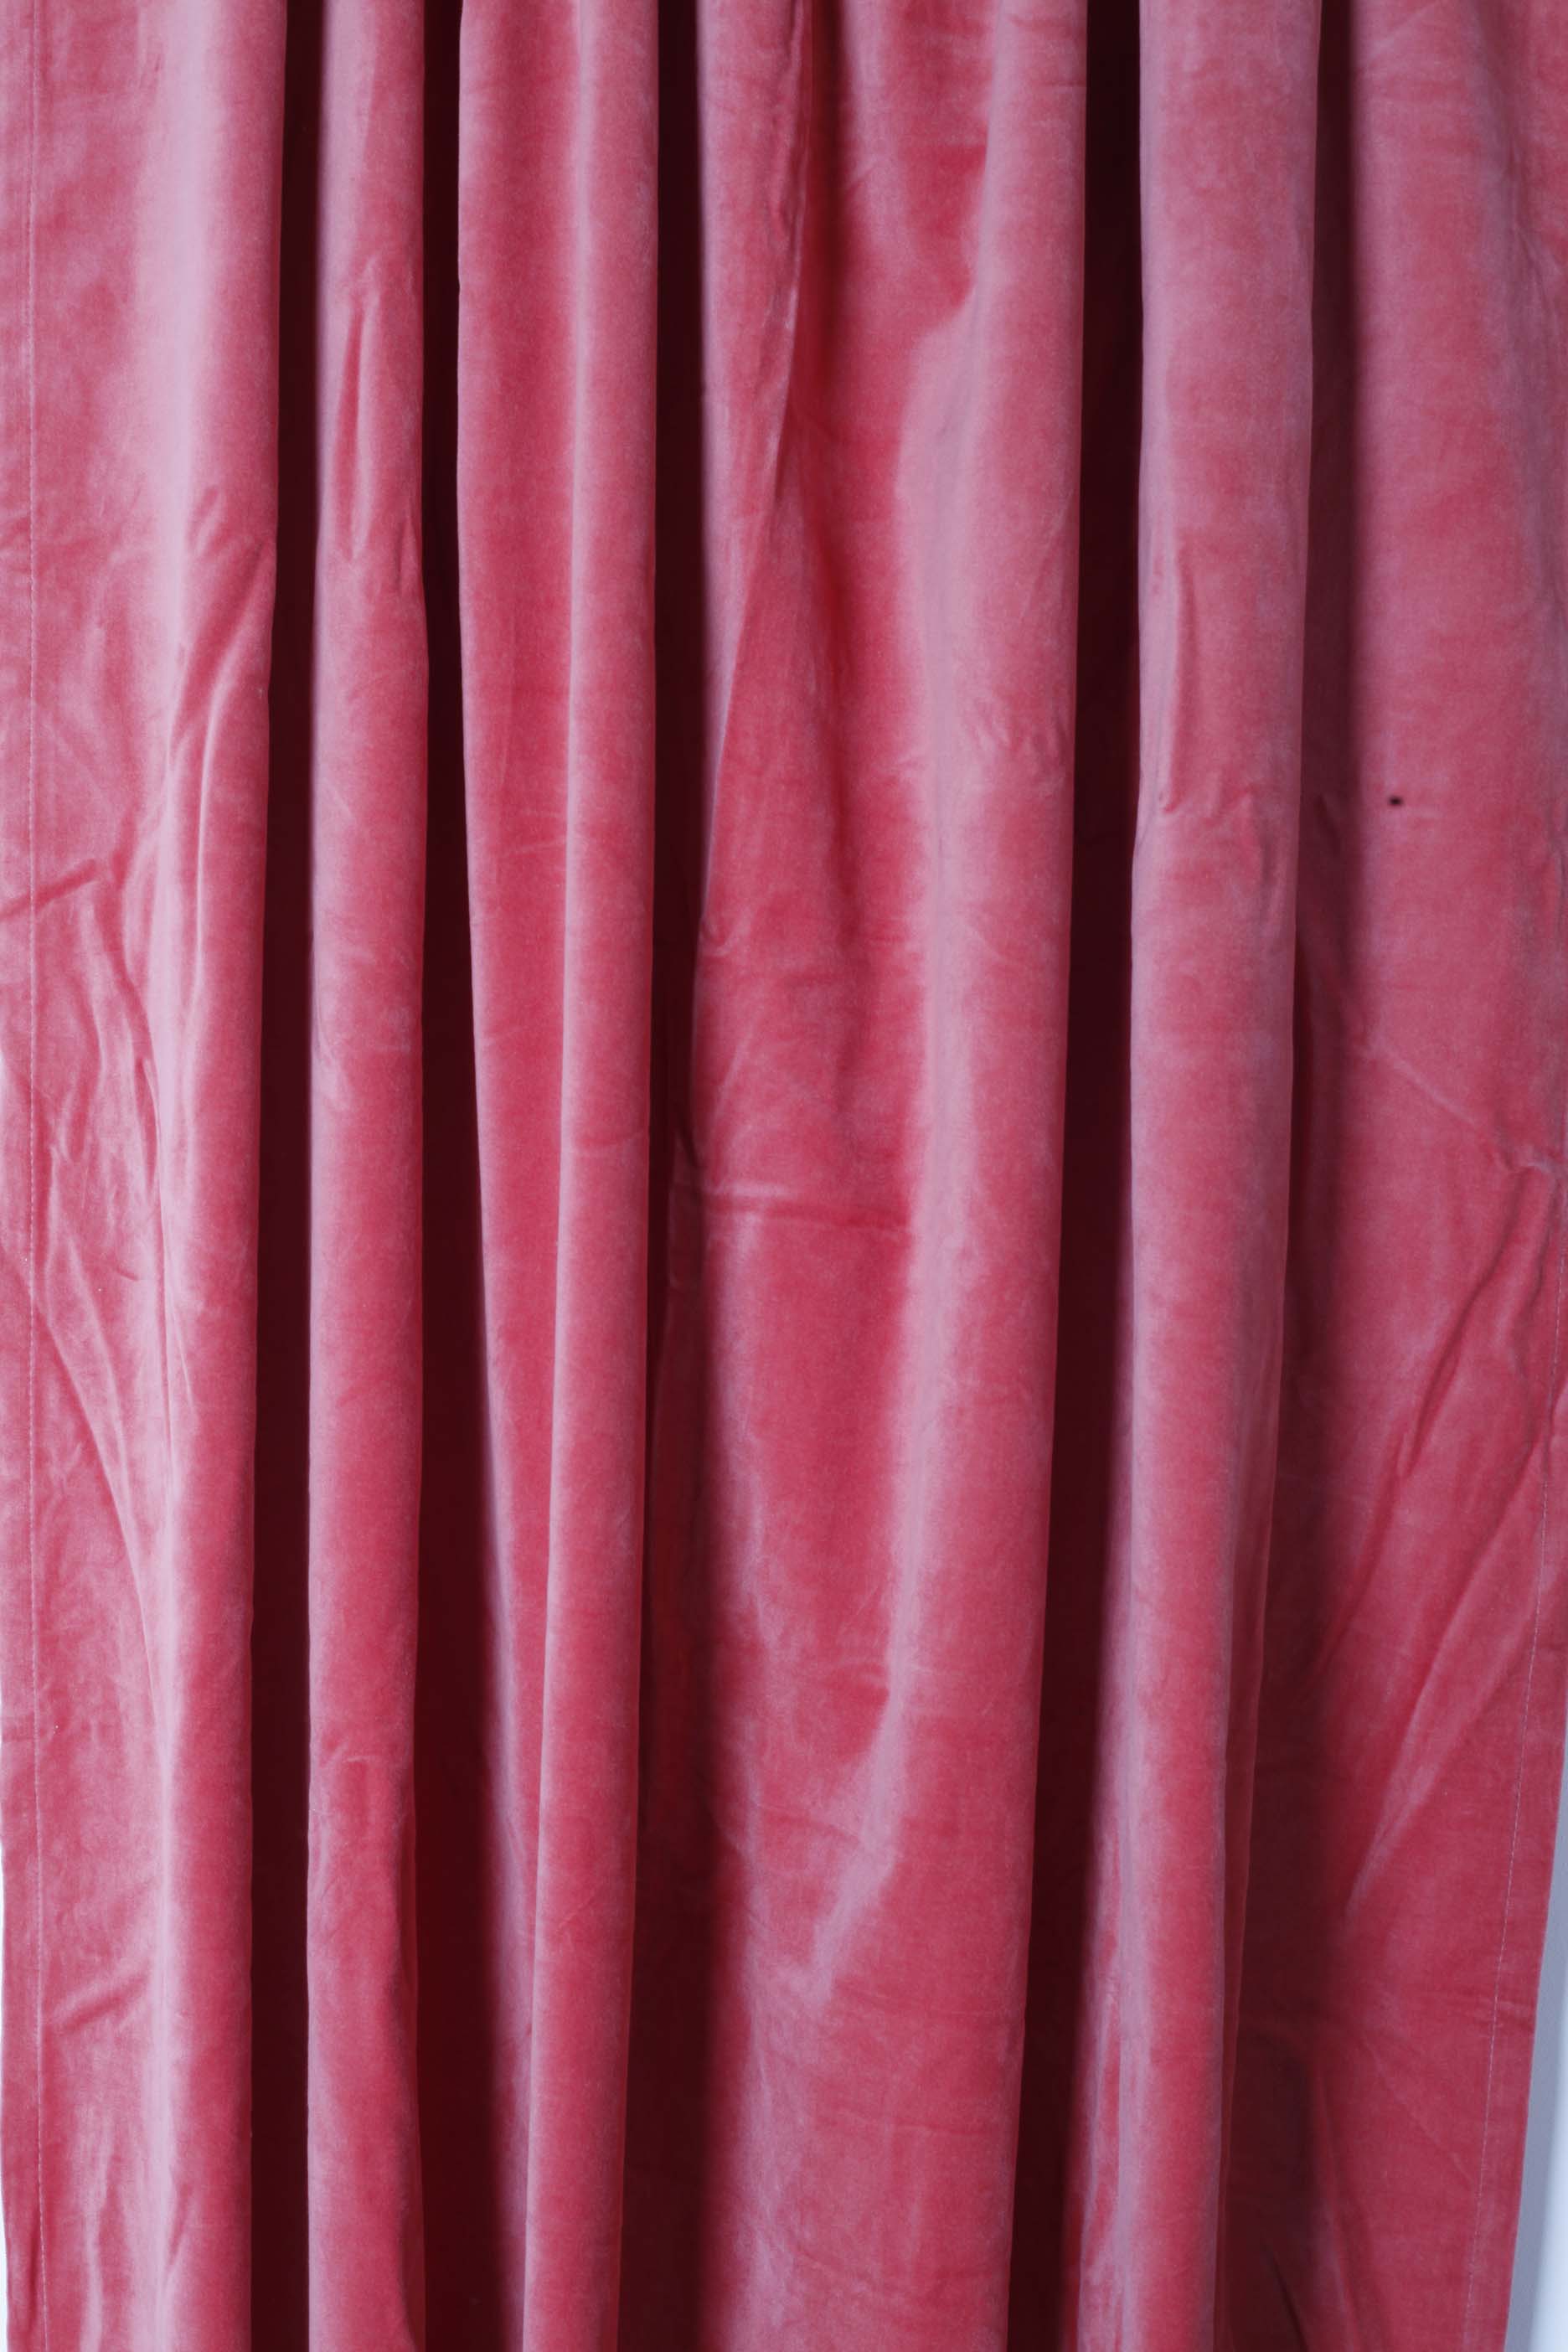 Coral Pink Velvet Curtains 1 Pair